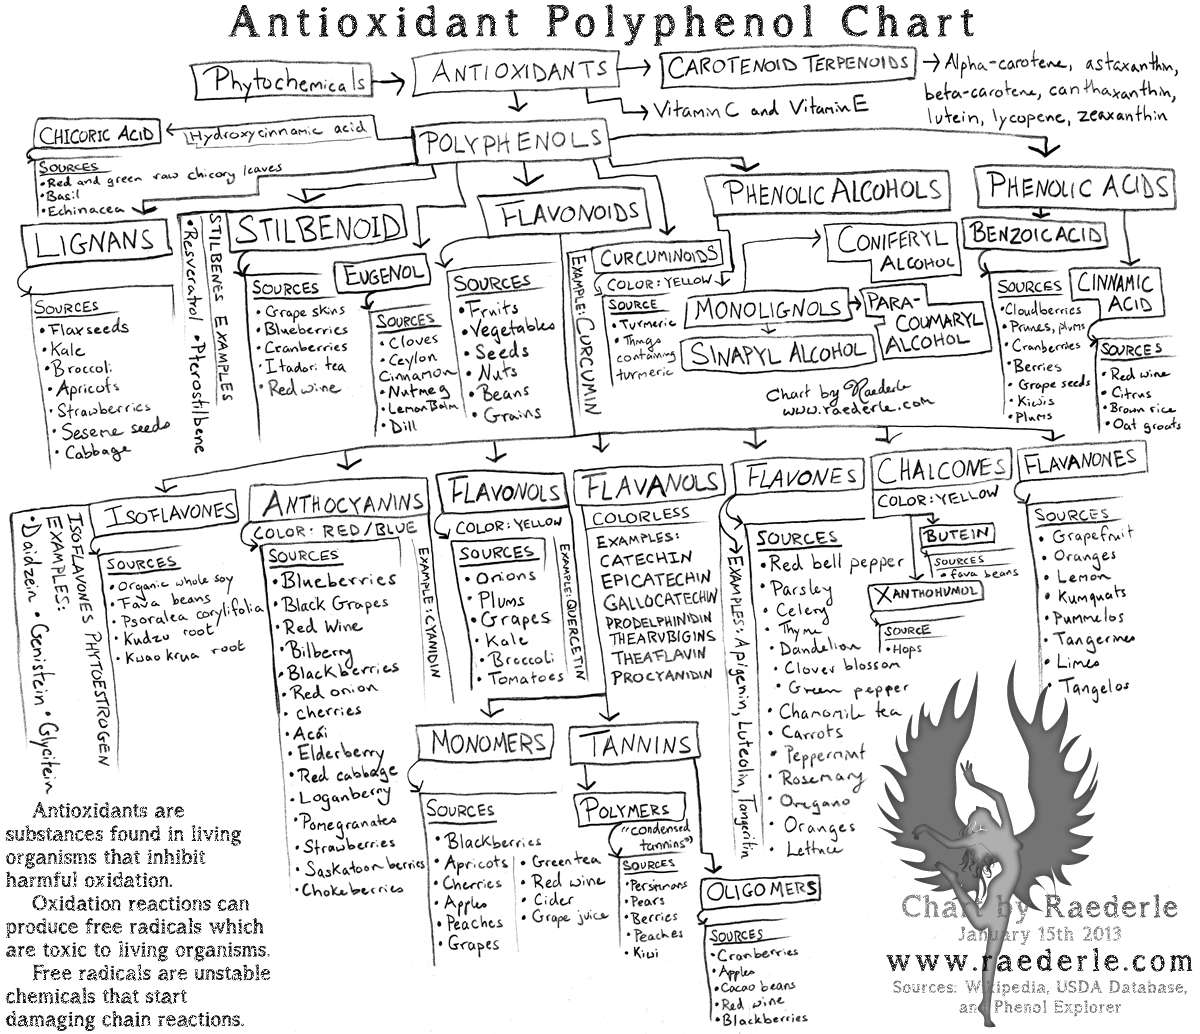 Raederle's Antioxidant Polyphenol Flavonoid Chart